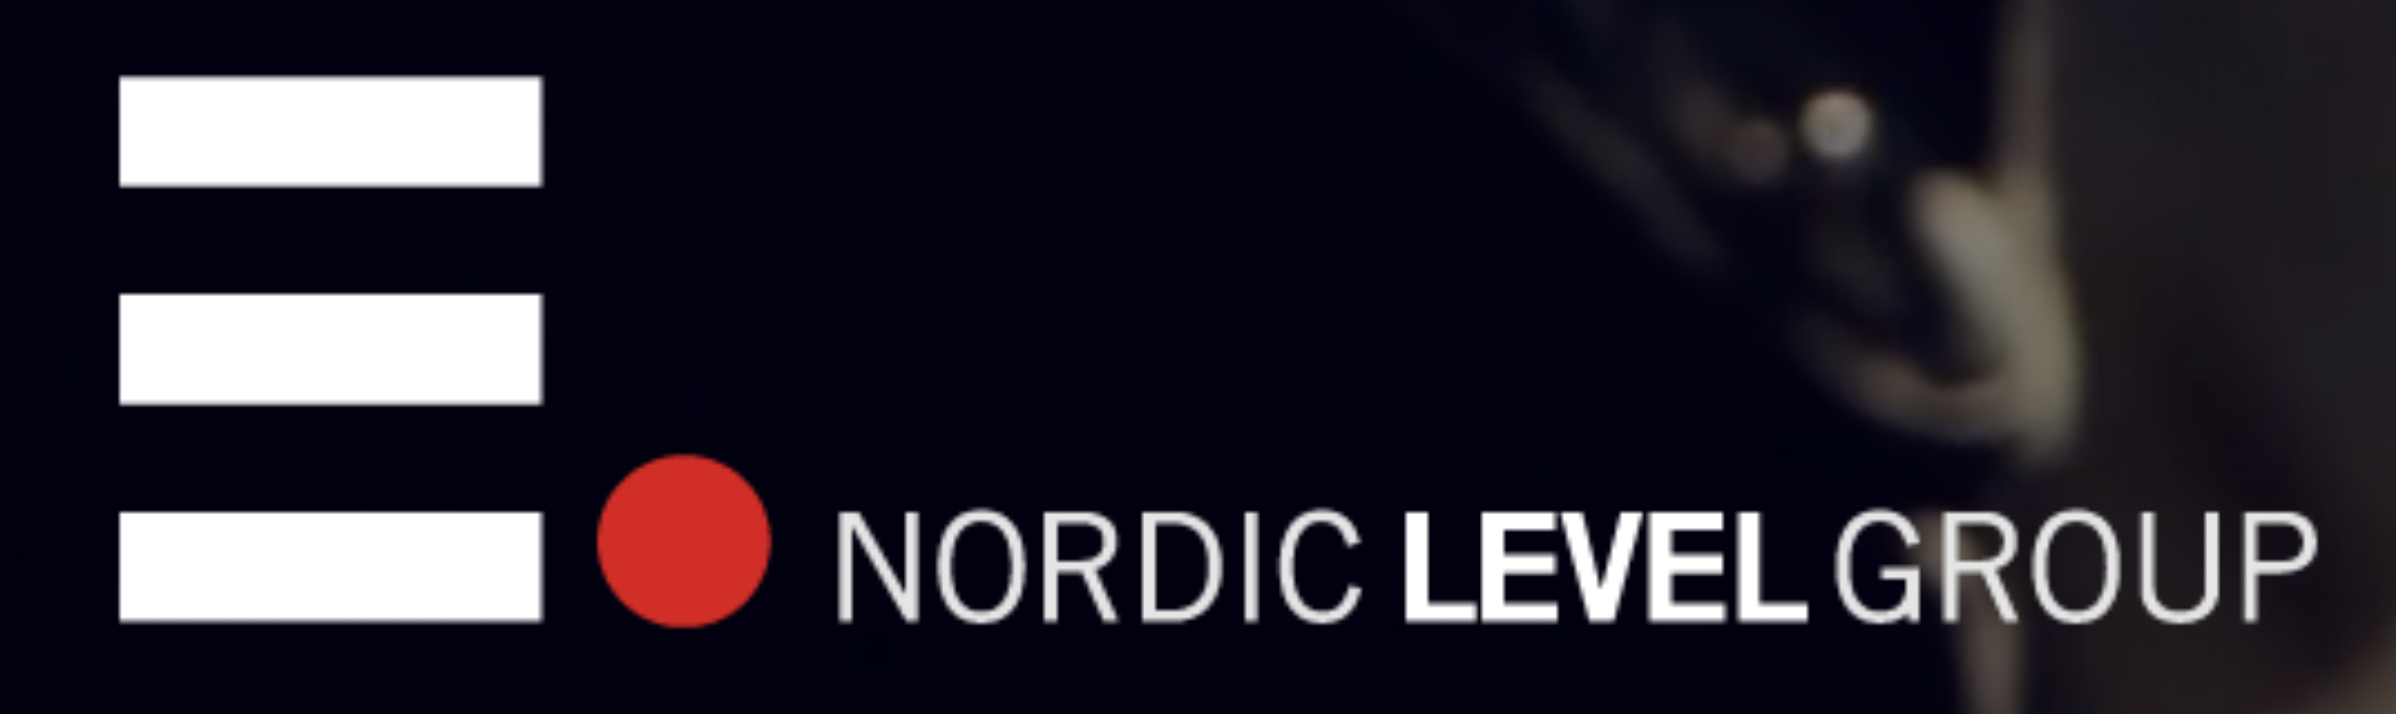 NordicLevel logo